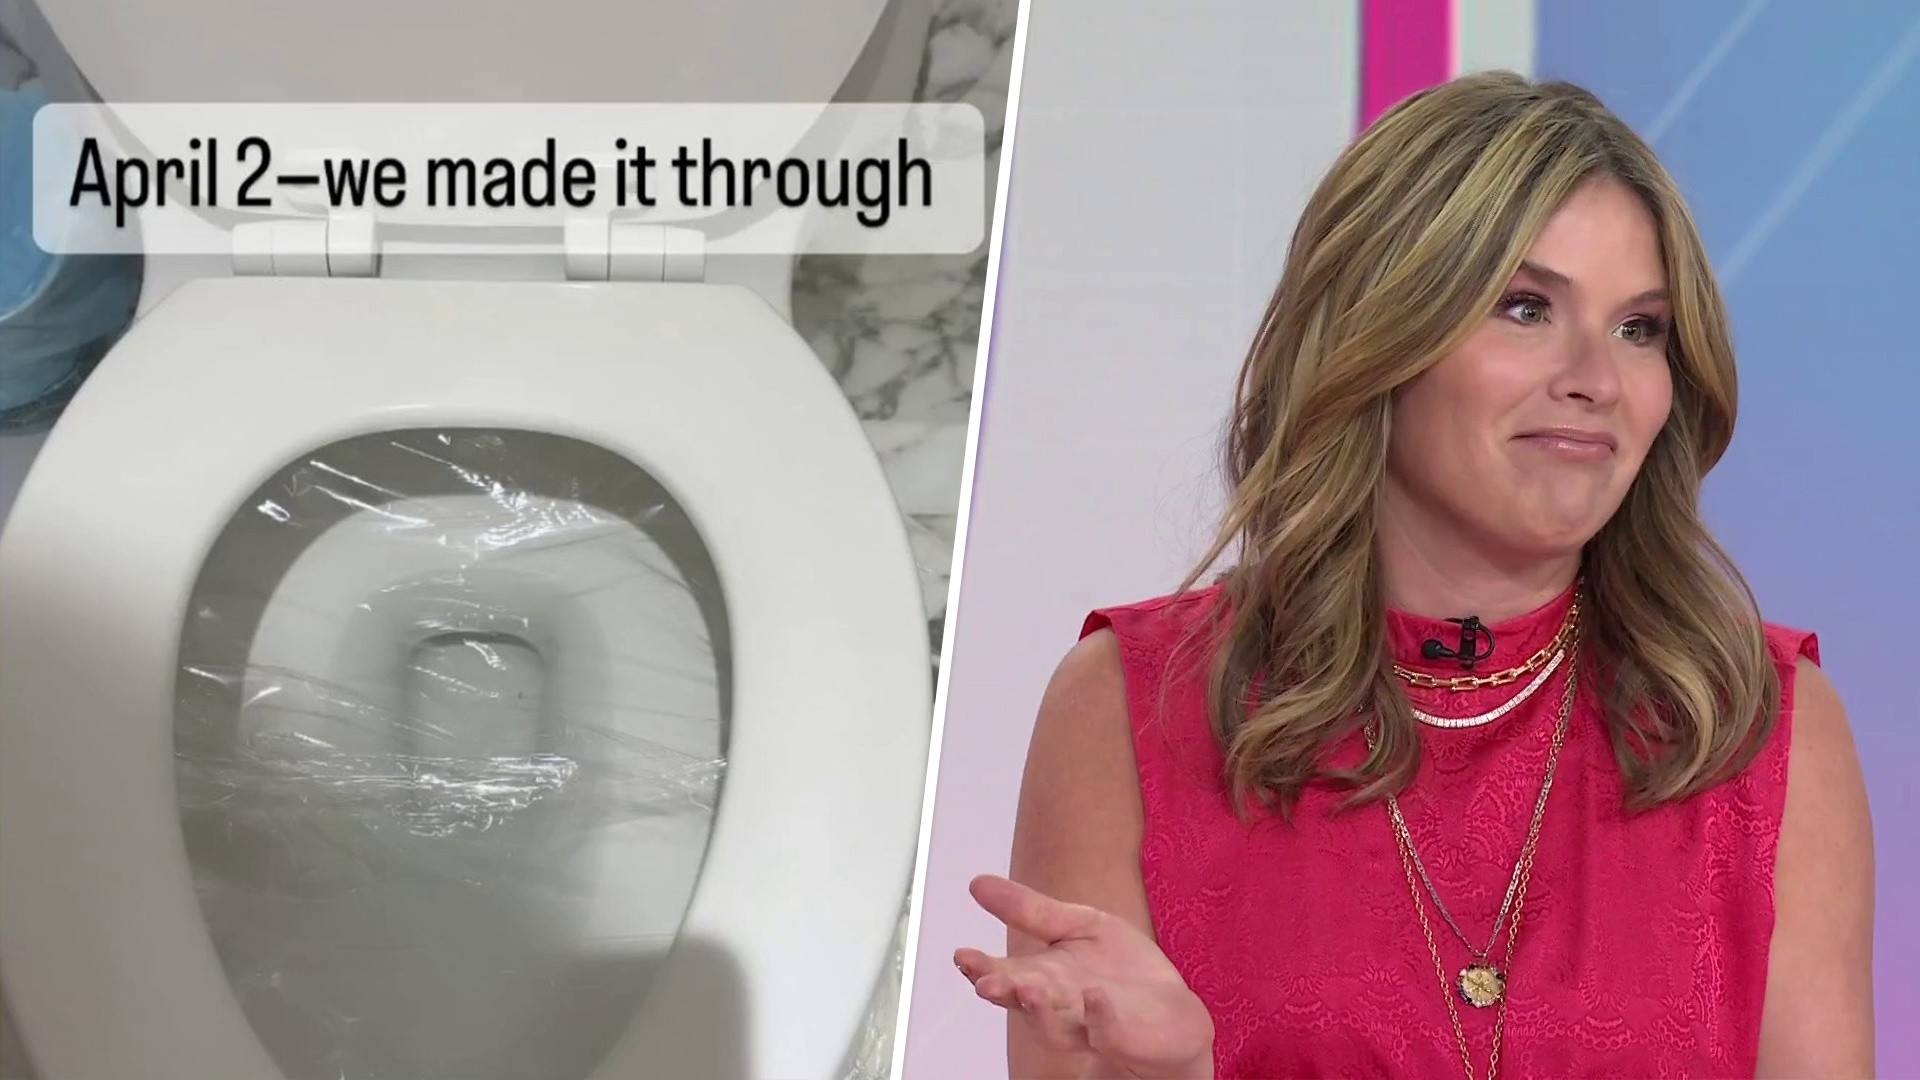 Jenna recounts family's hilarious pee and poo April Fools pranks